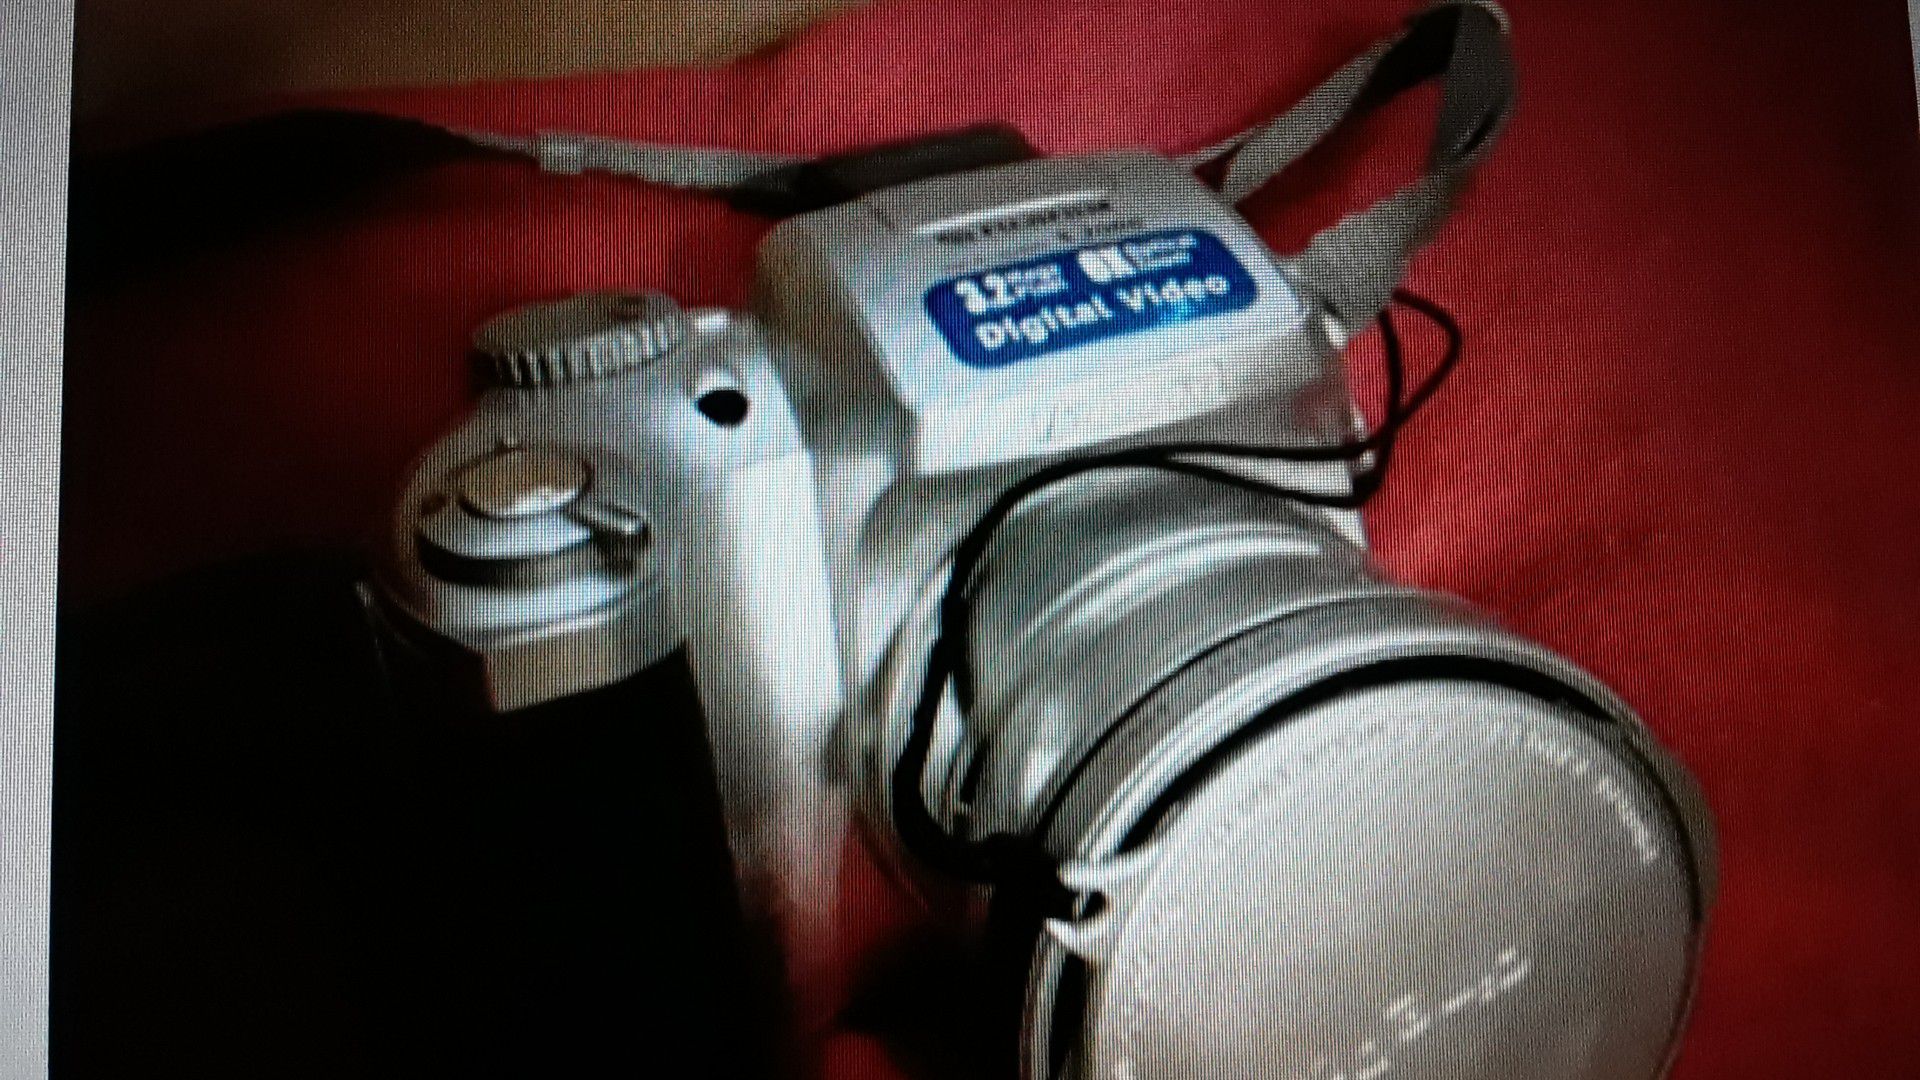 Camera Fujifilm S3000 Digital camera